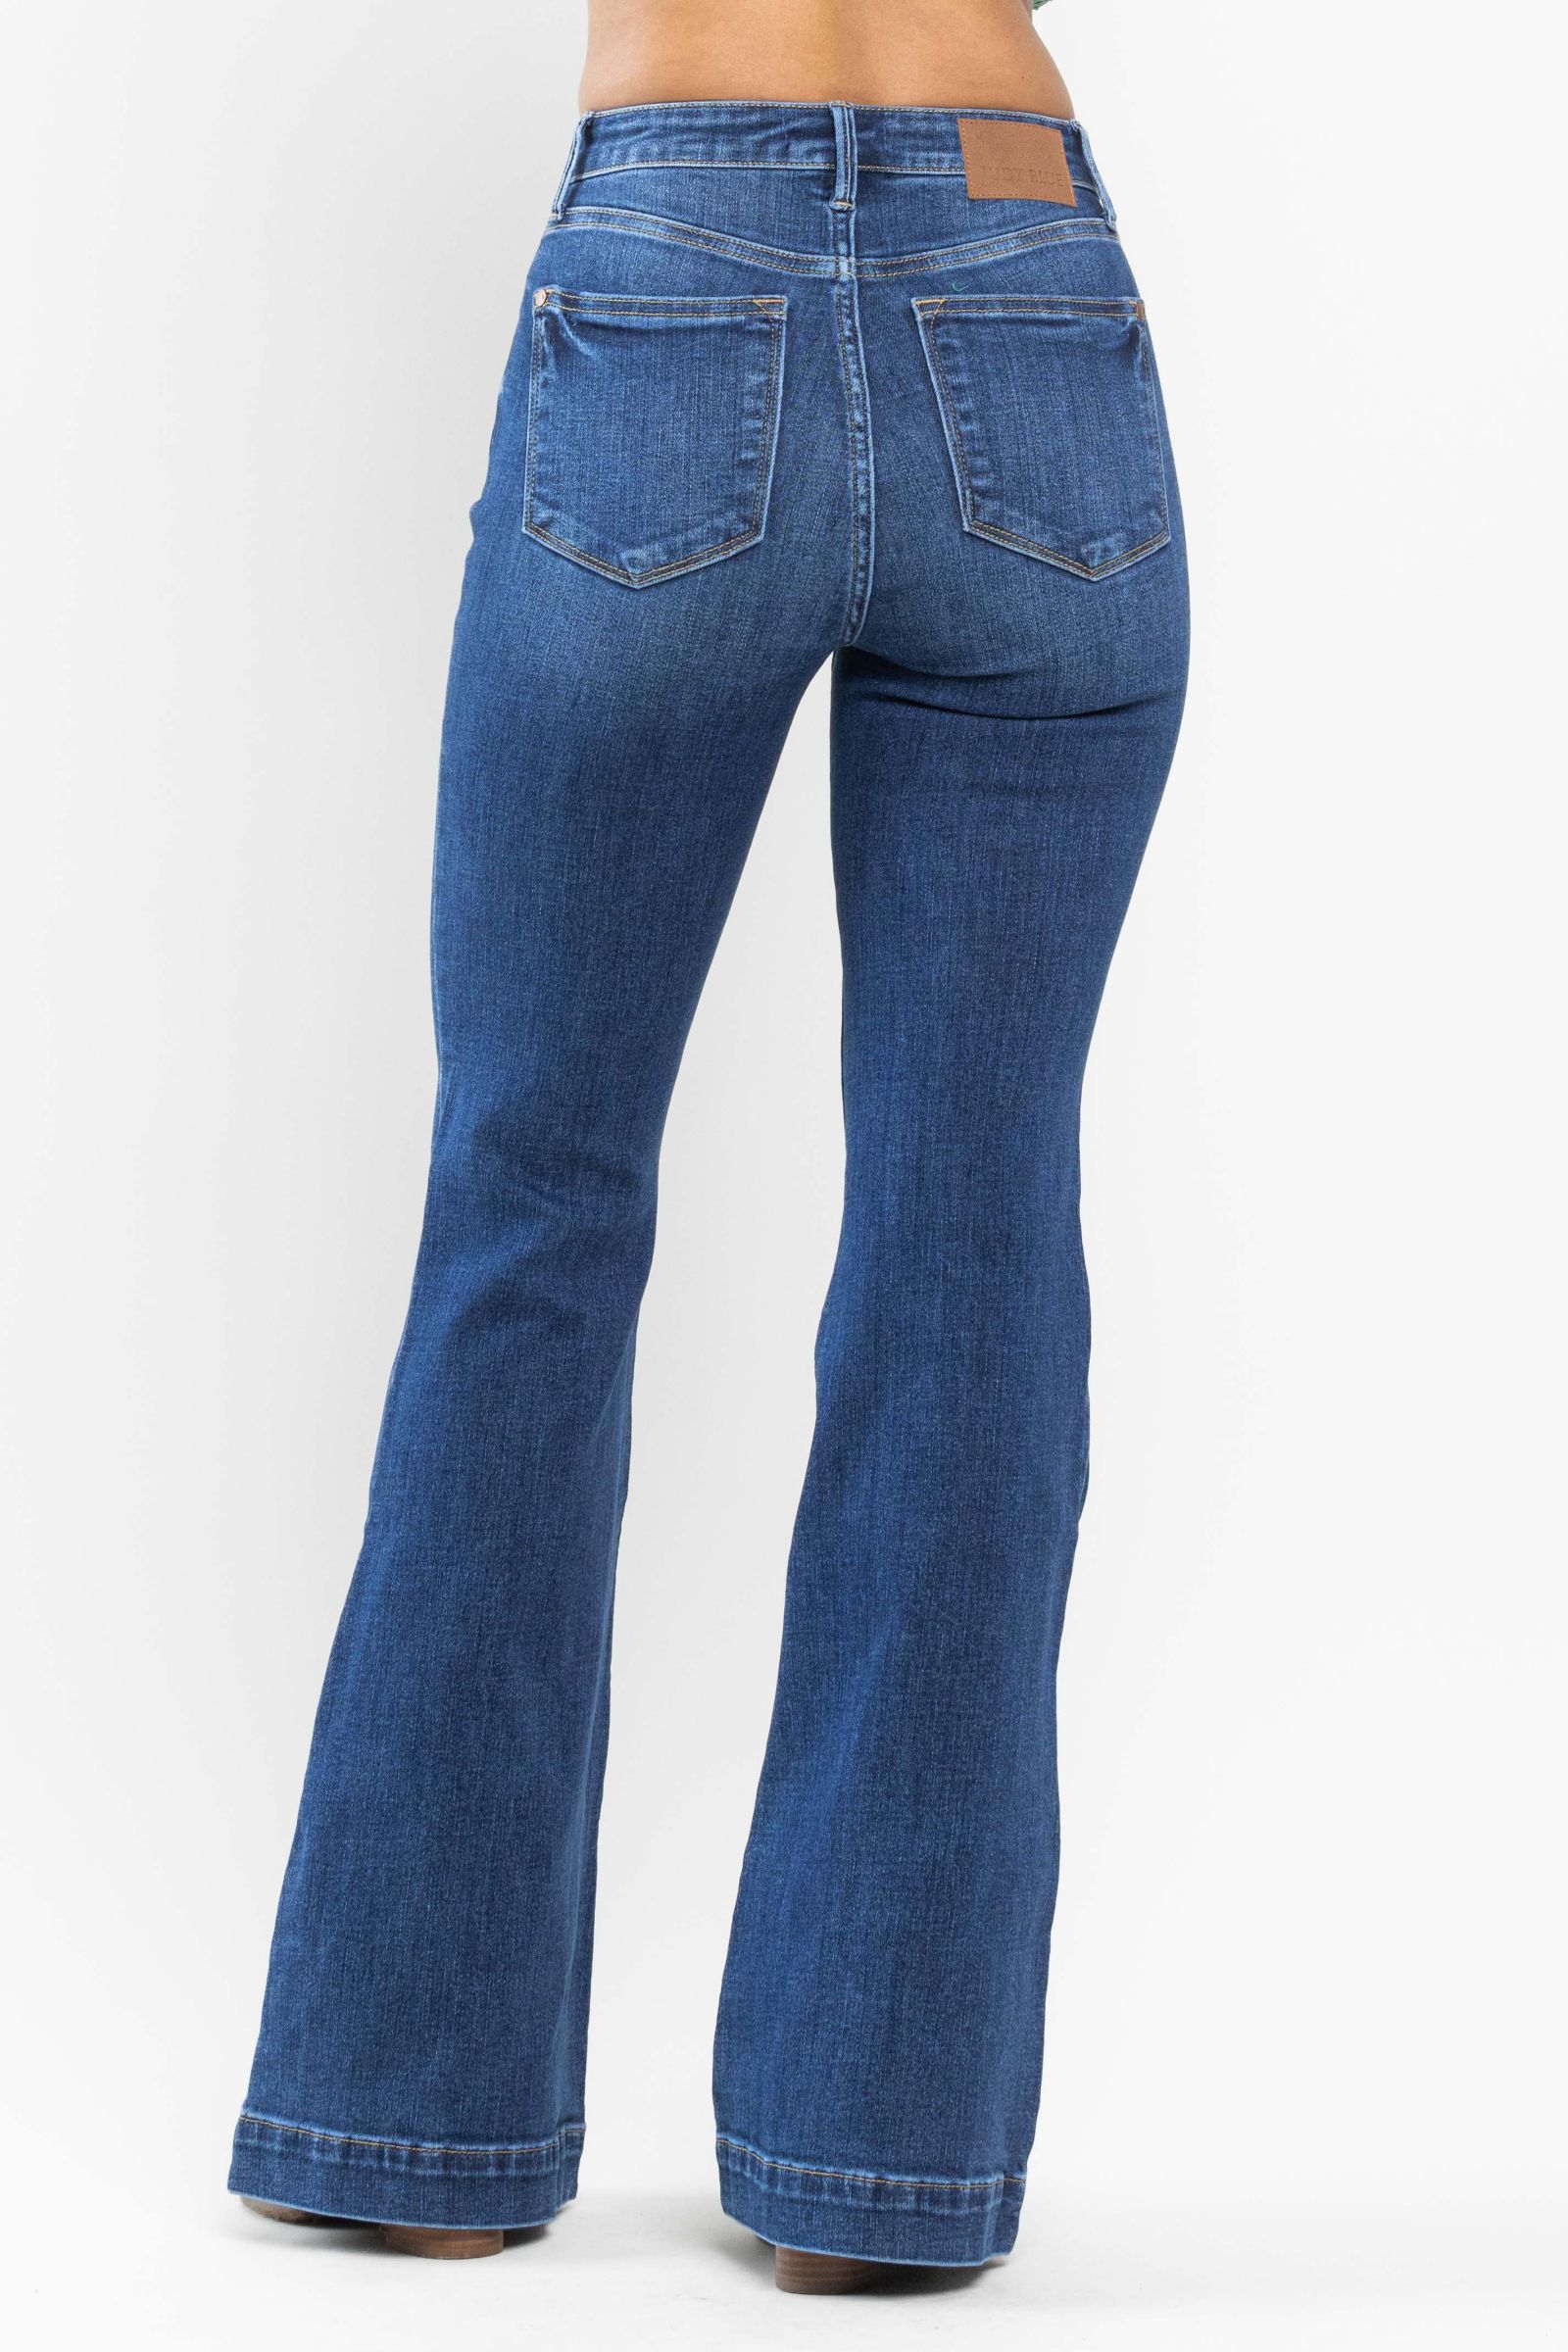 judy blue high waist wide hem flare jeans in medium wash JB82443REG MD